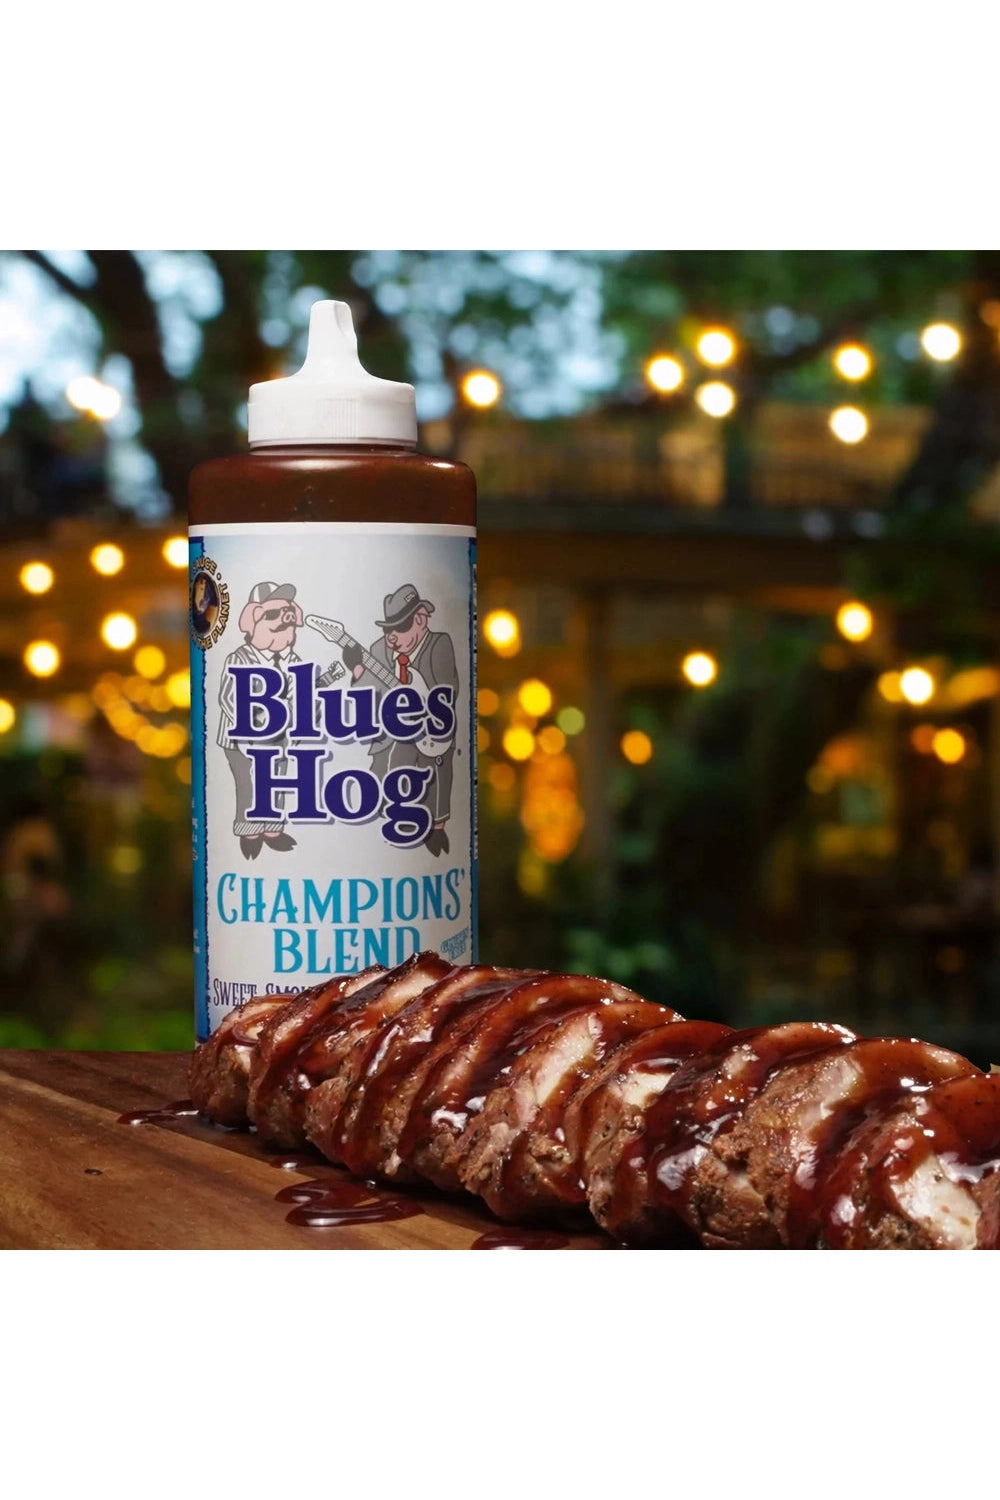 BLUES HOG Champions Blend - 24 oz Blues Hog Chilliwack BBQ Supply